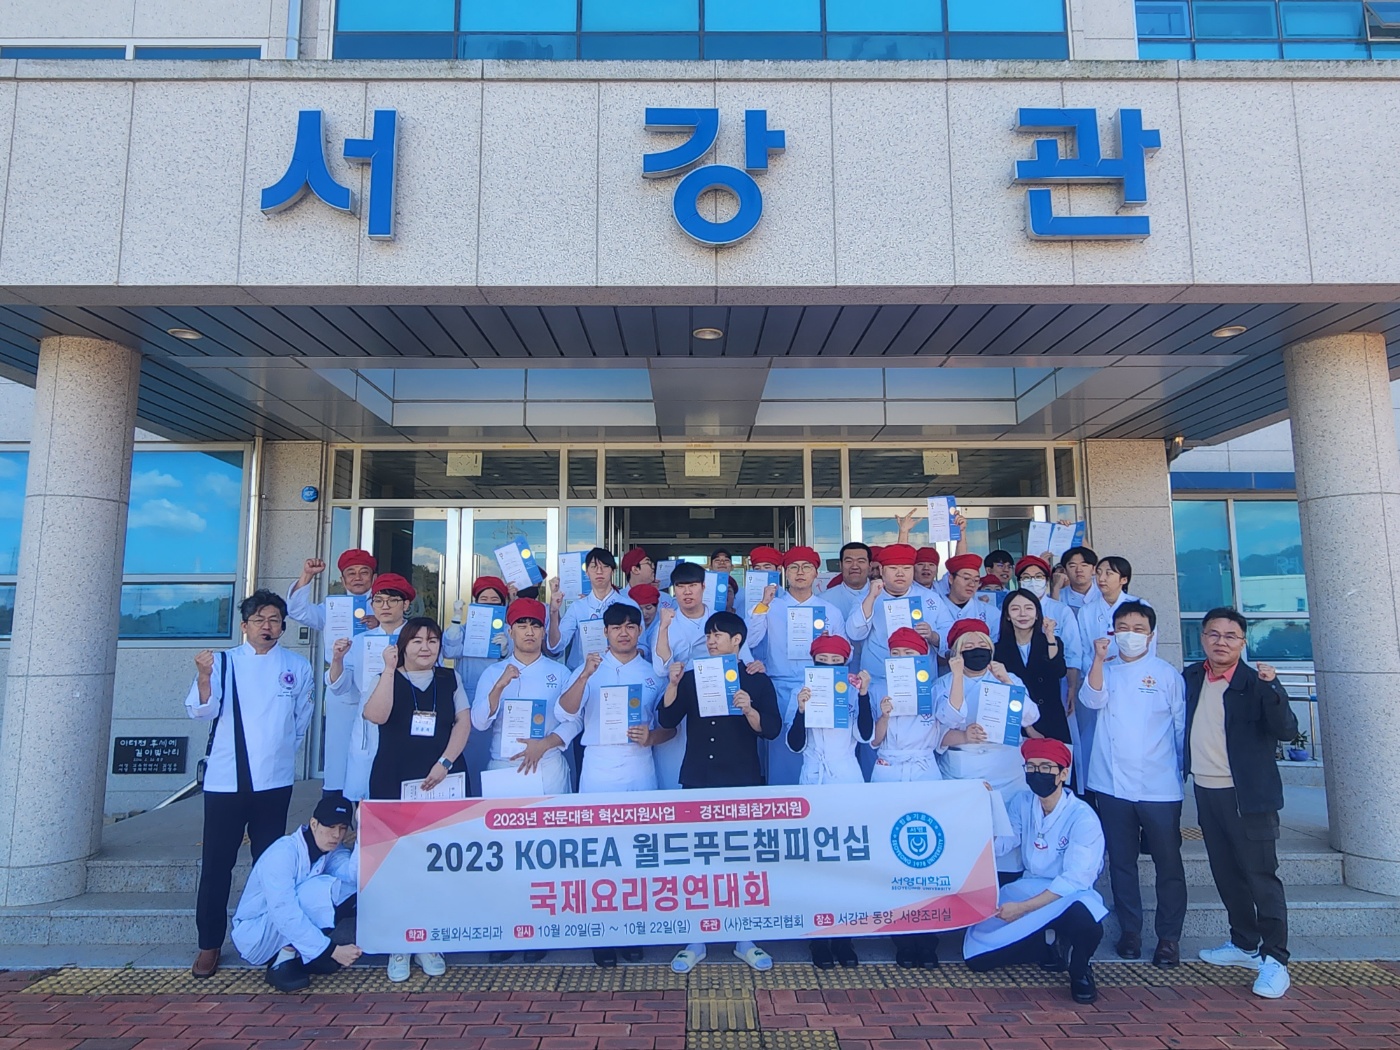 ‘2023 KOREA 월드푸드챔피언십 국제요리경연대회'   최우수상(농촌진흥청장상) 및 우수상(국회의원상) 수상  상세정보 페이지로 이동하기